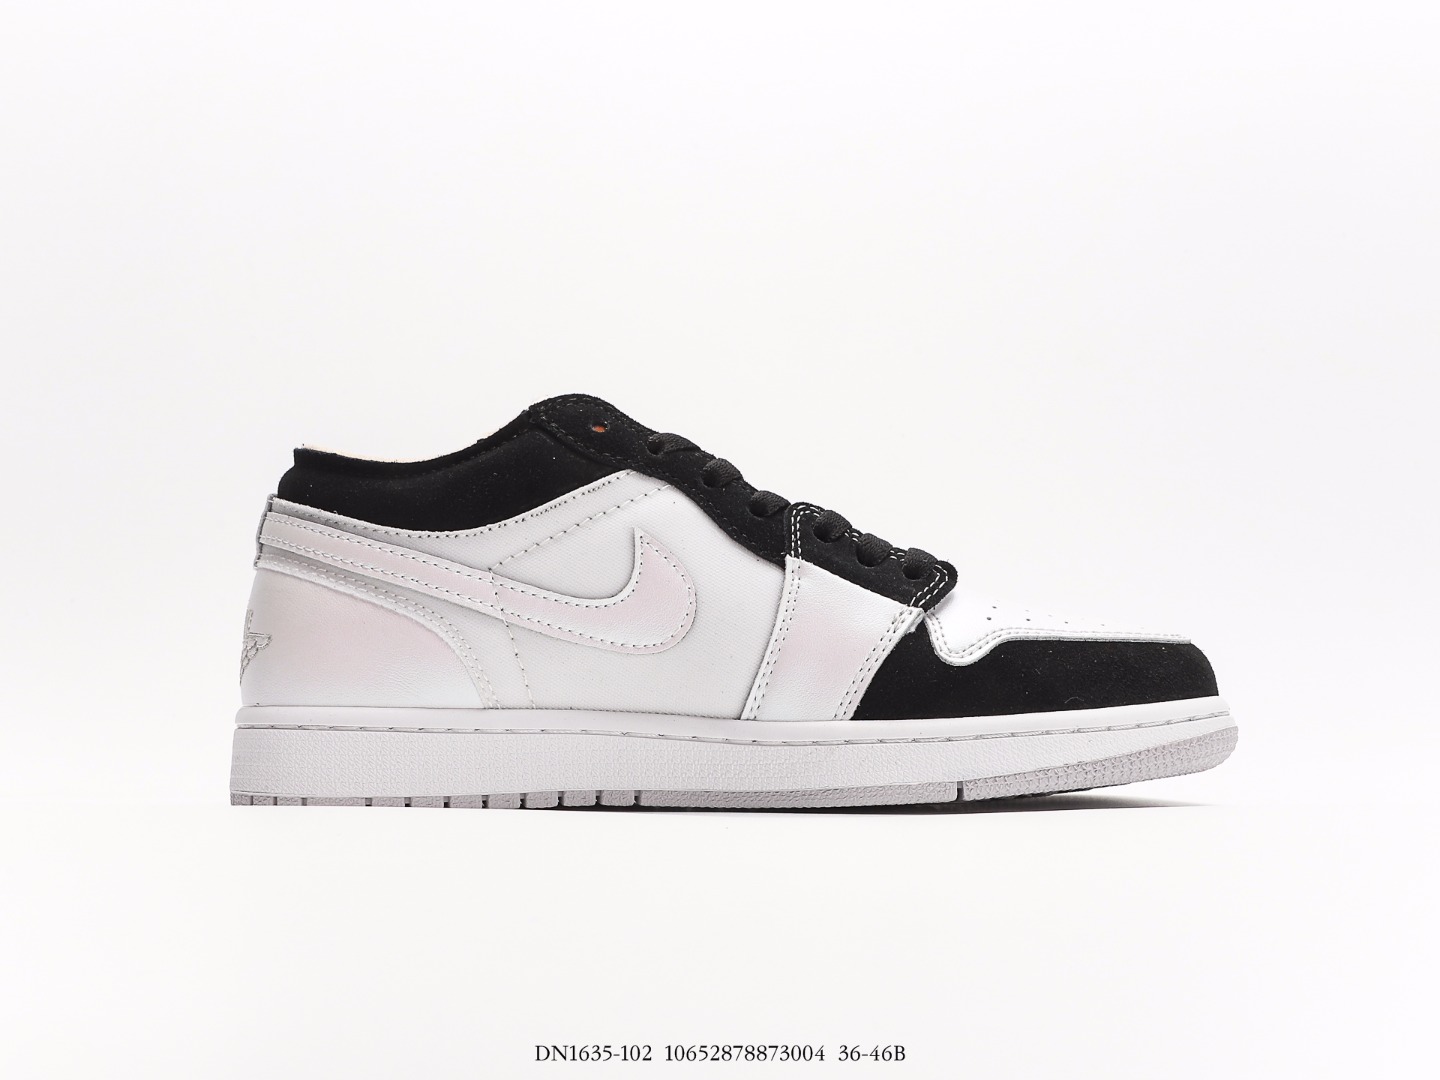 Nike Air Jordan 1 Low SE Craft“inside - Out”DN1635-102